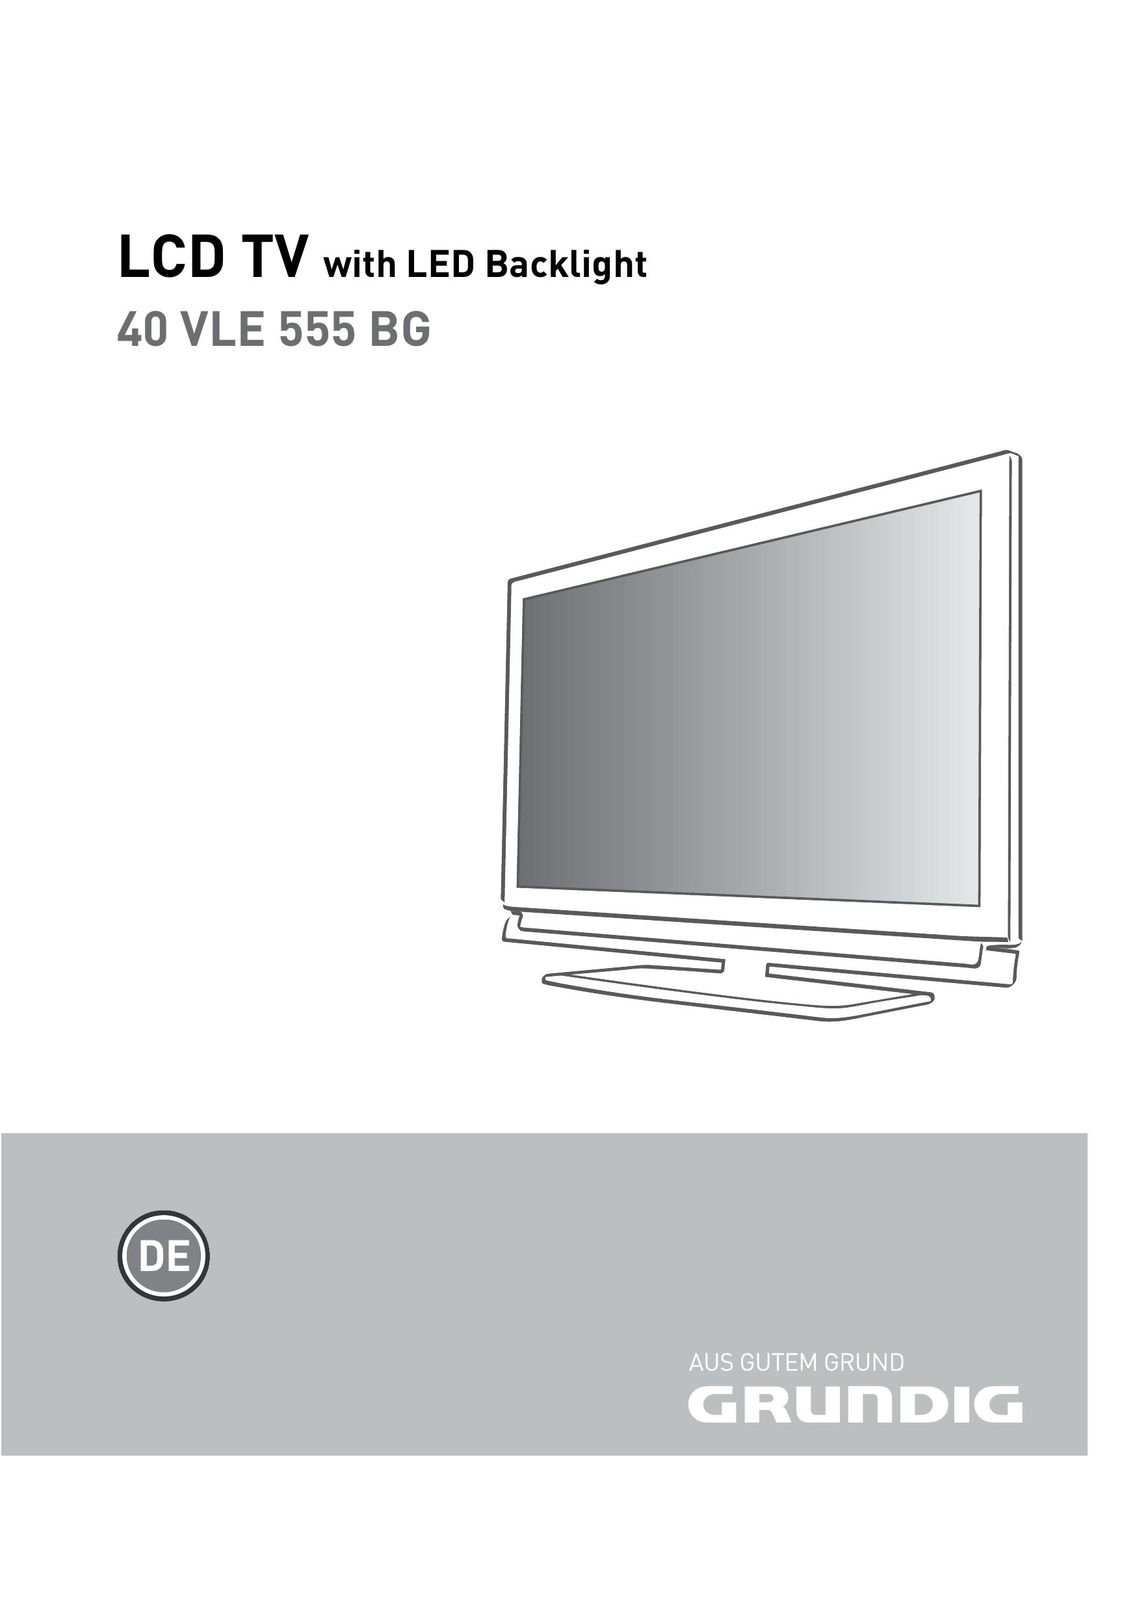 Grundig 40 VLE 555 BG Flat Panel Television User Manual